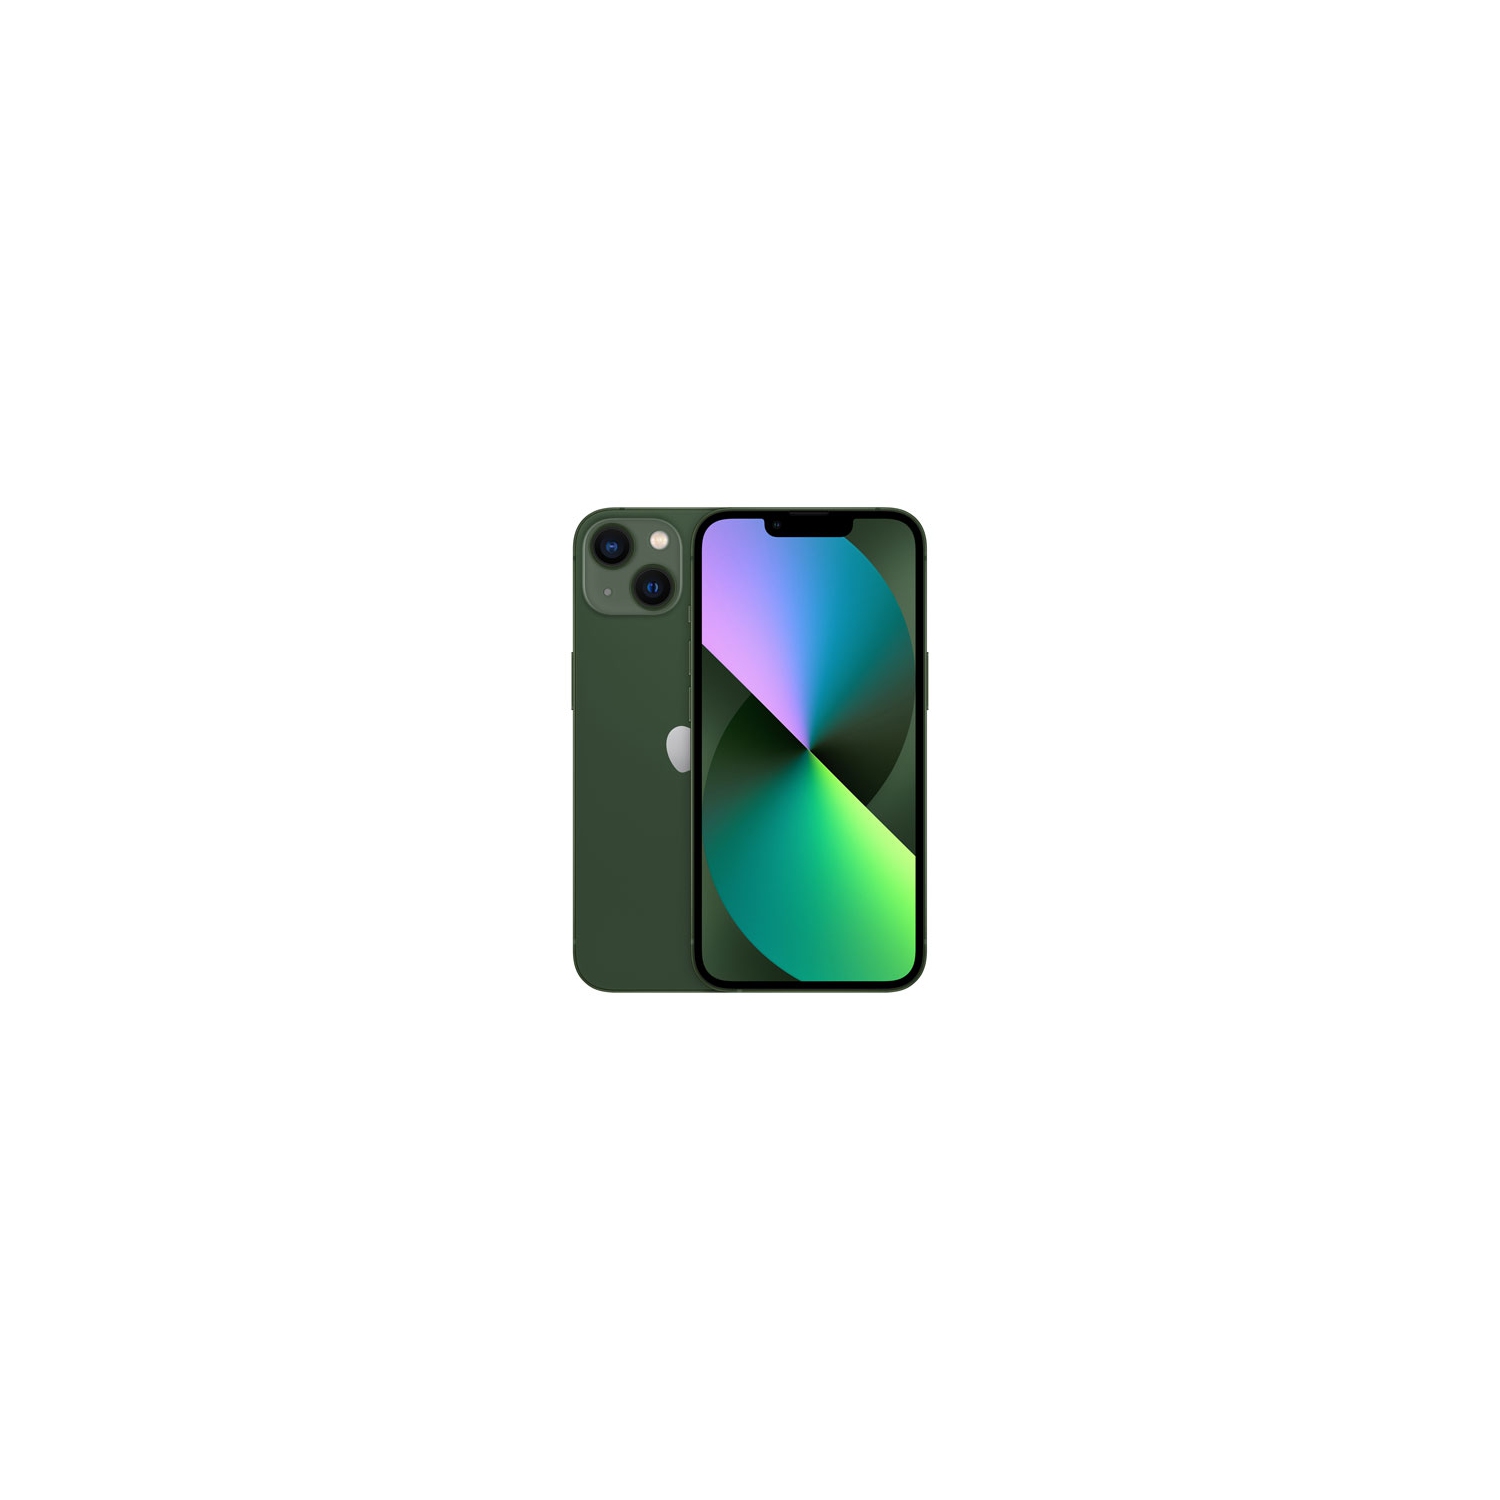 Apple iPhone 13 mini 256GB - Green - Unlocked - Refurbished